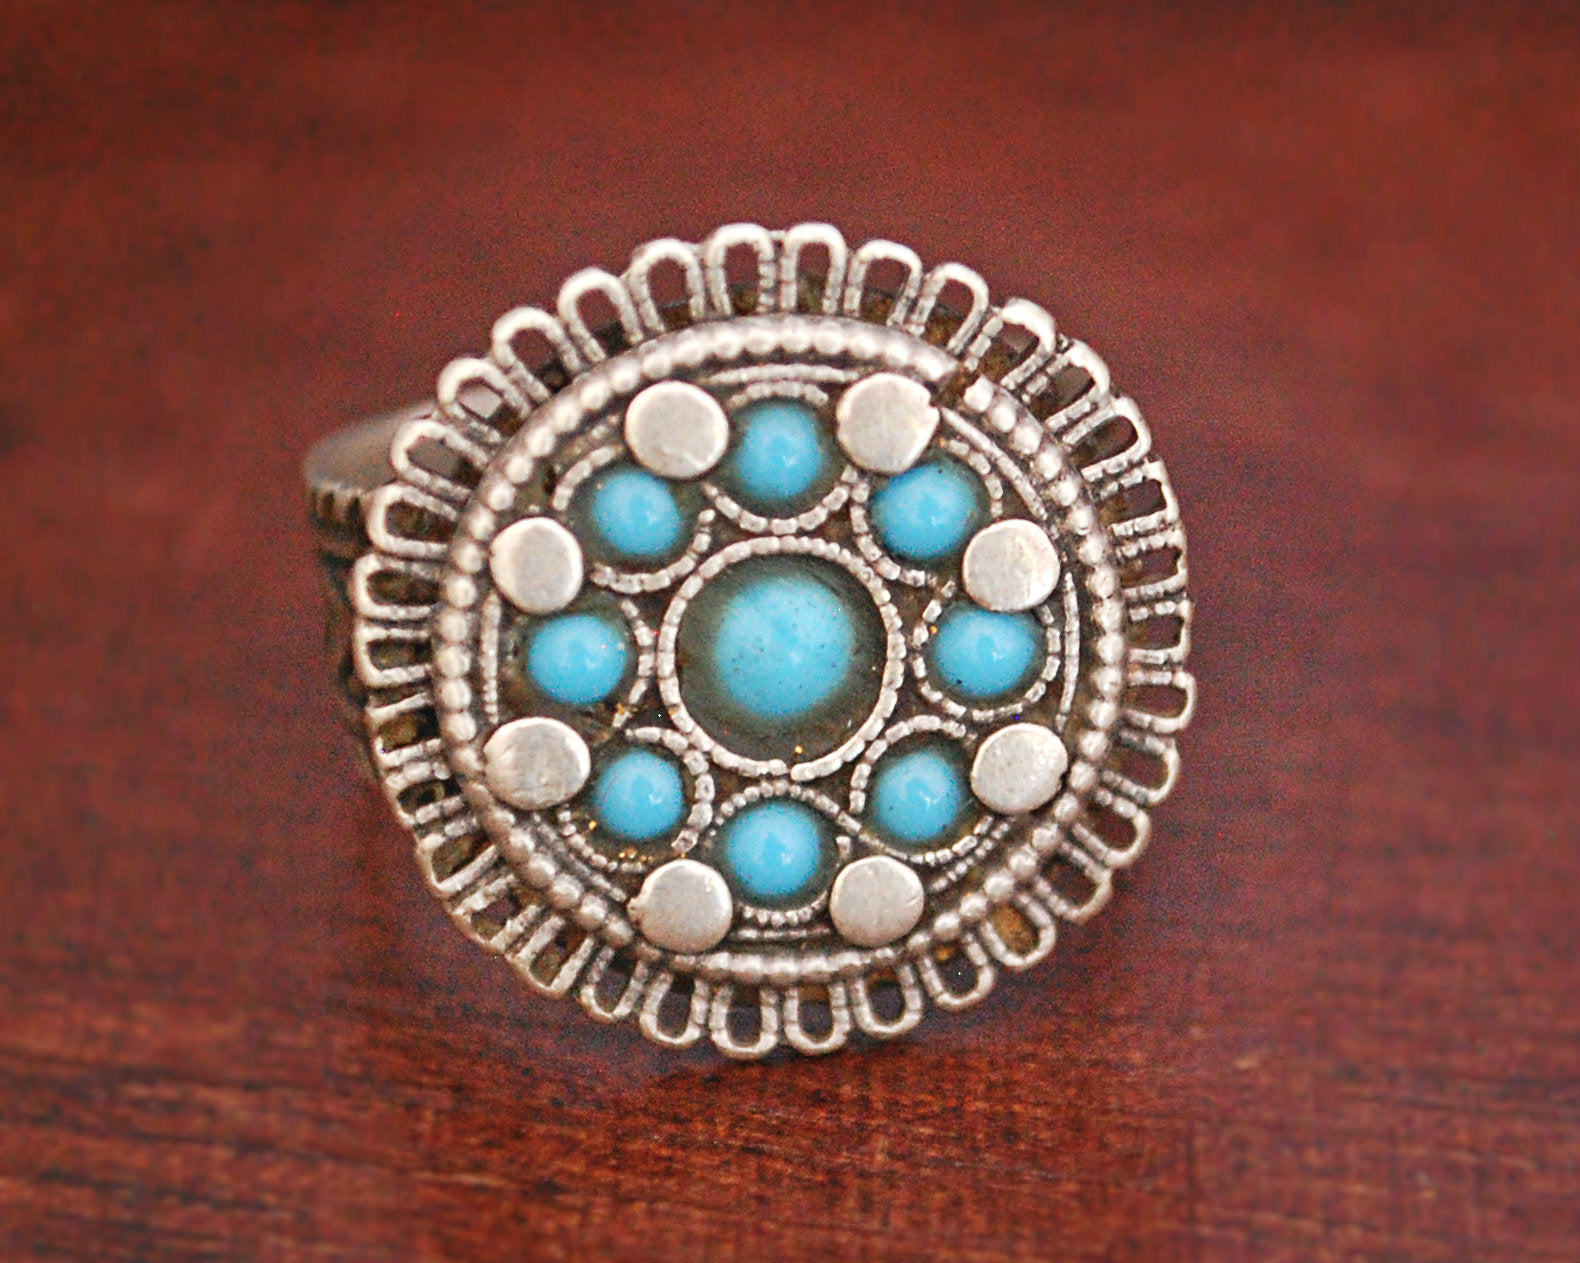 Afghani Turquoise Ring - Size 6.75